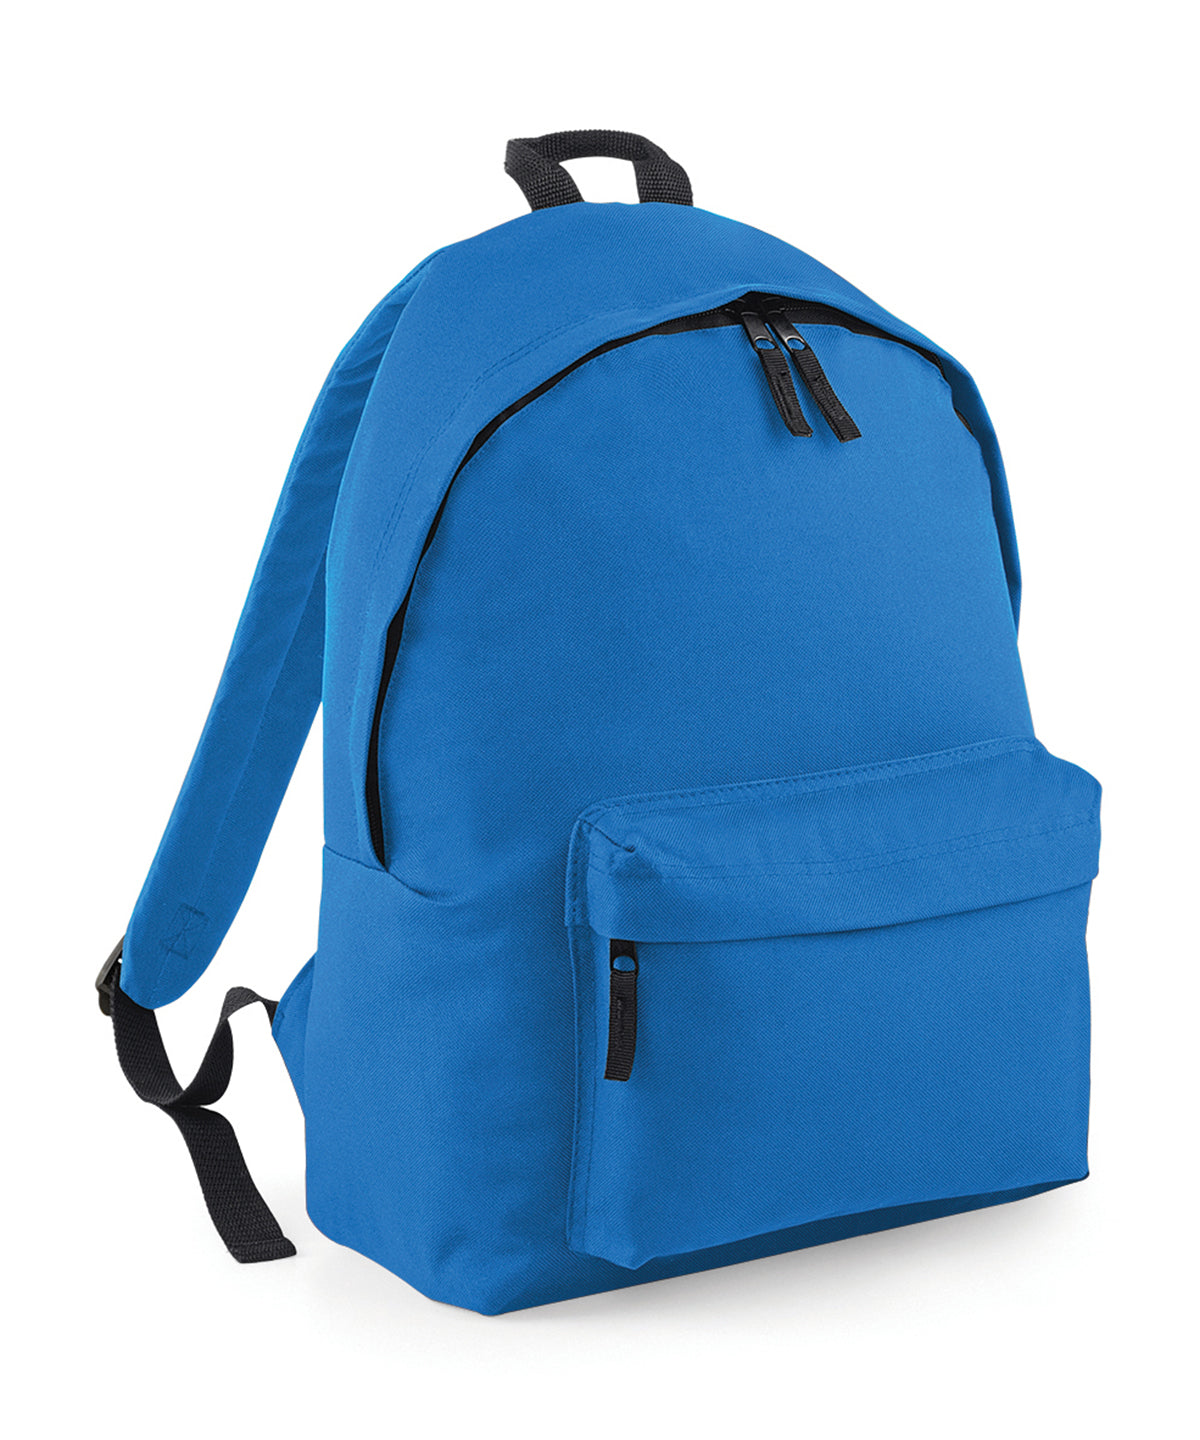 Personalised Bags - Sapphire Bagbase Original fashion backpack